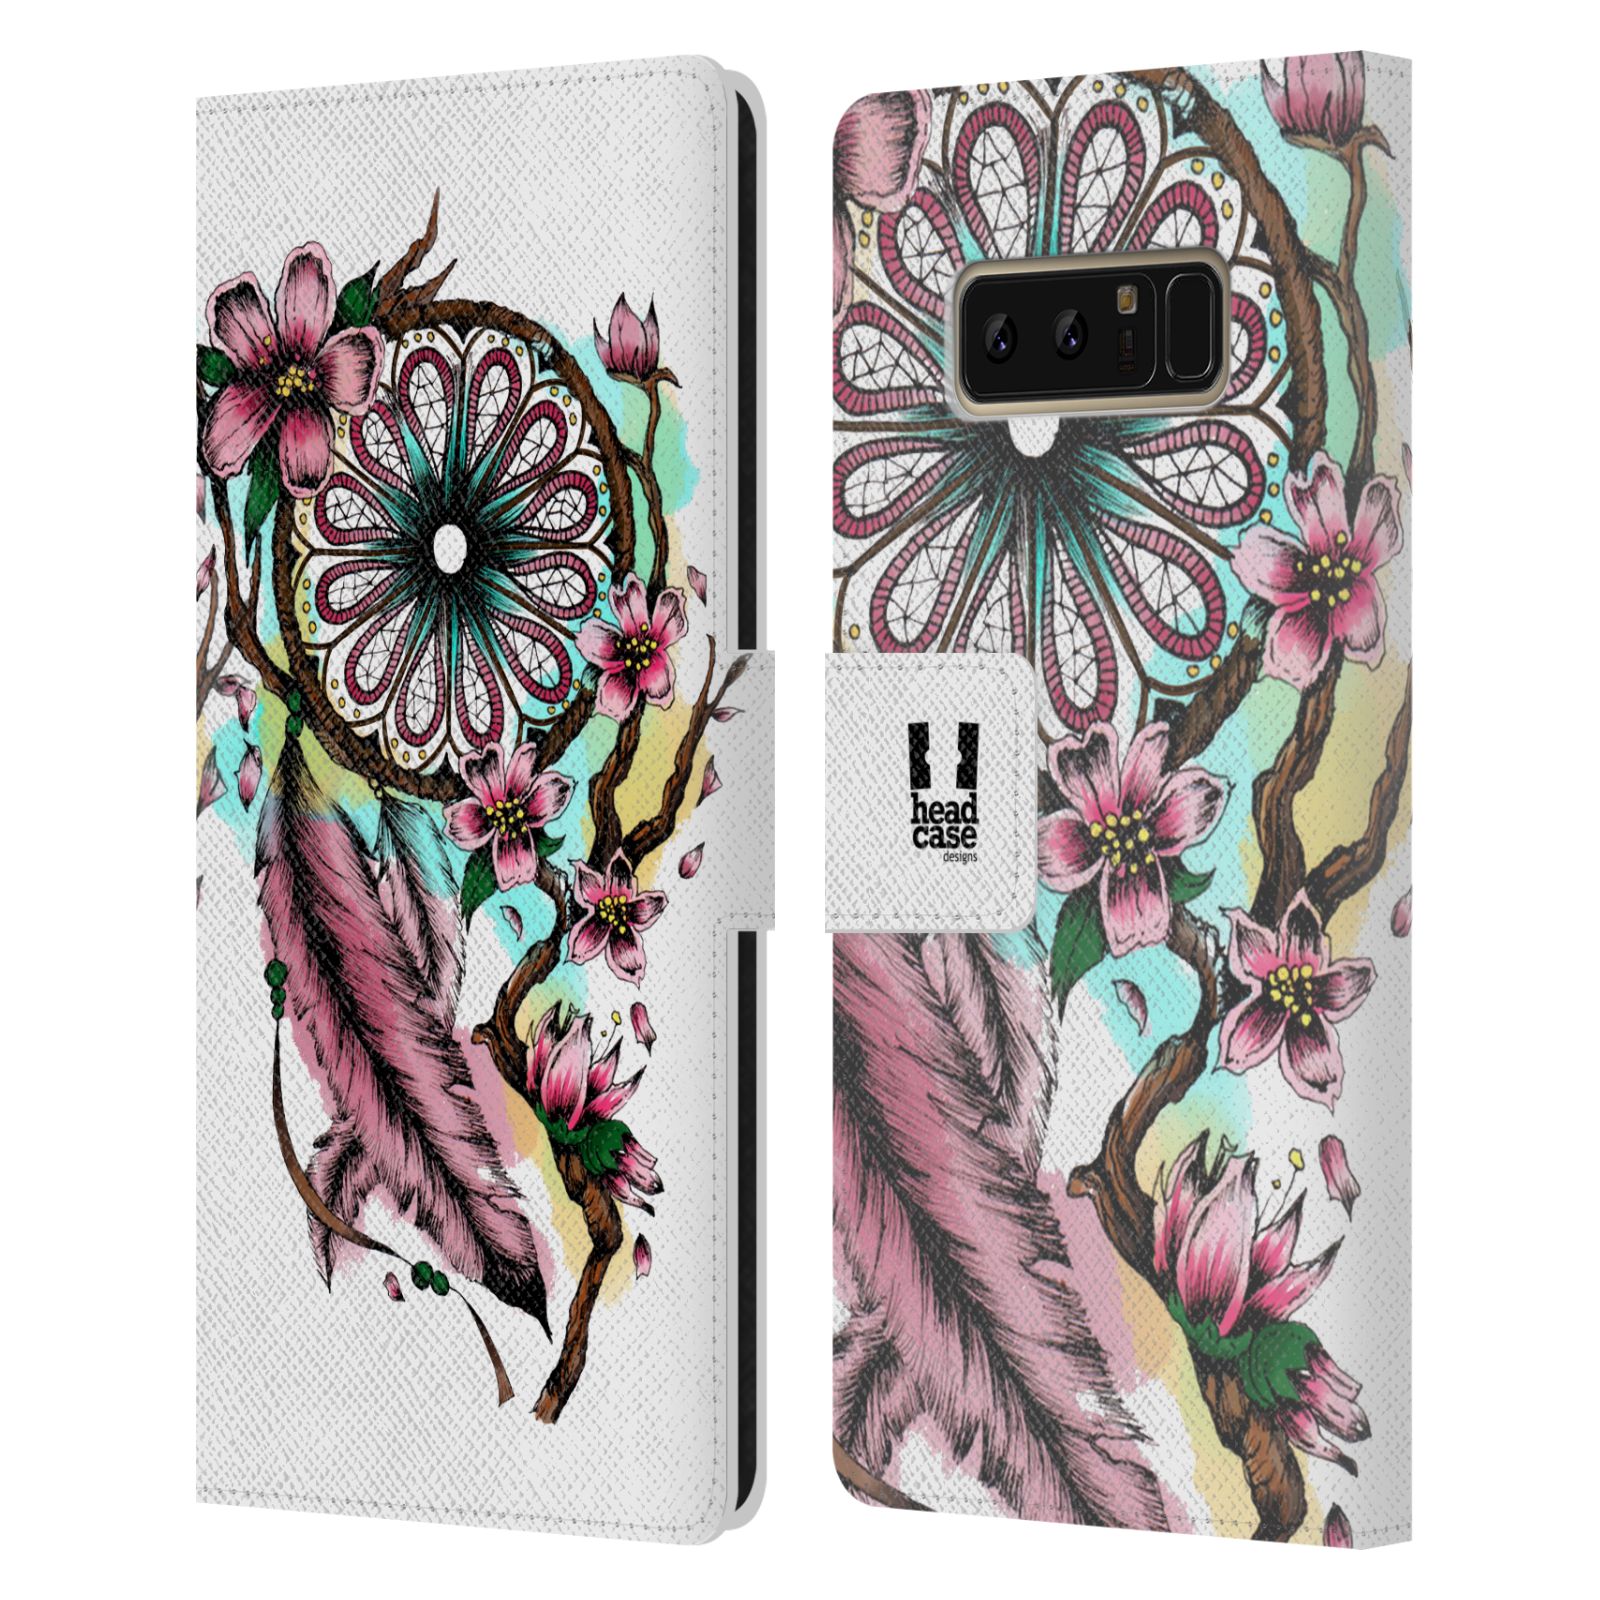 Pouzdro pro mobil Samsung Galaxy Note 8  - Květinový vzor lapač snů